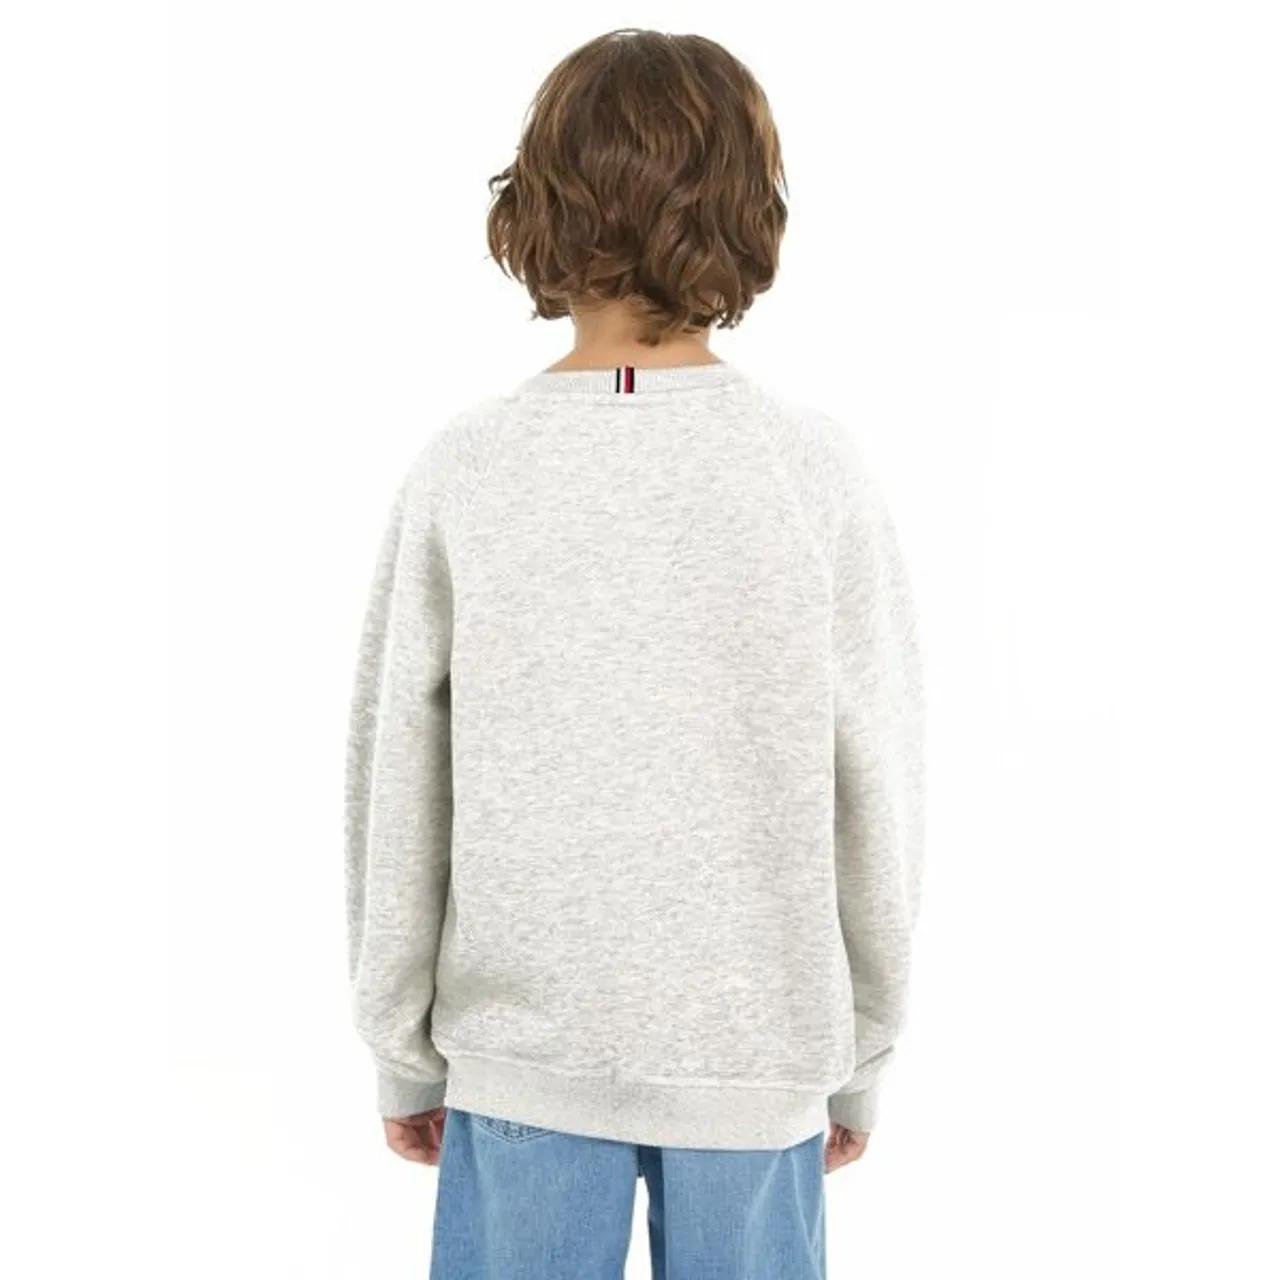 Sweatshirt TOMMY HILFIGER "HILFIGER TRACK SWEATSHIRT" Gr. 5 (110), grau (new light grey) Mädchen Sweatshirts